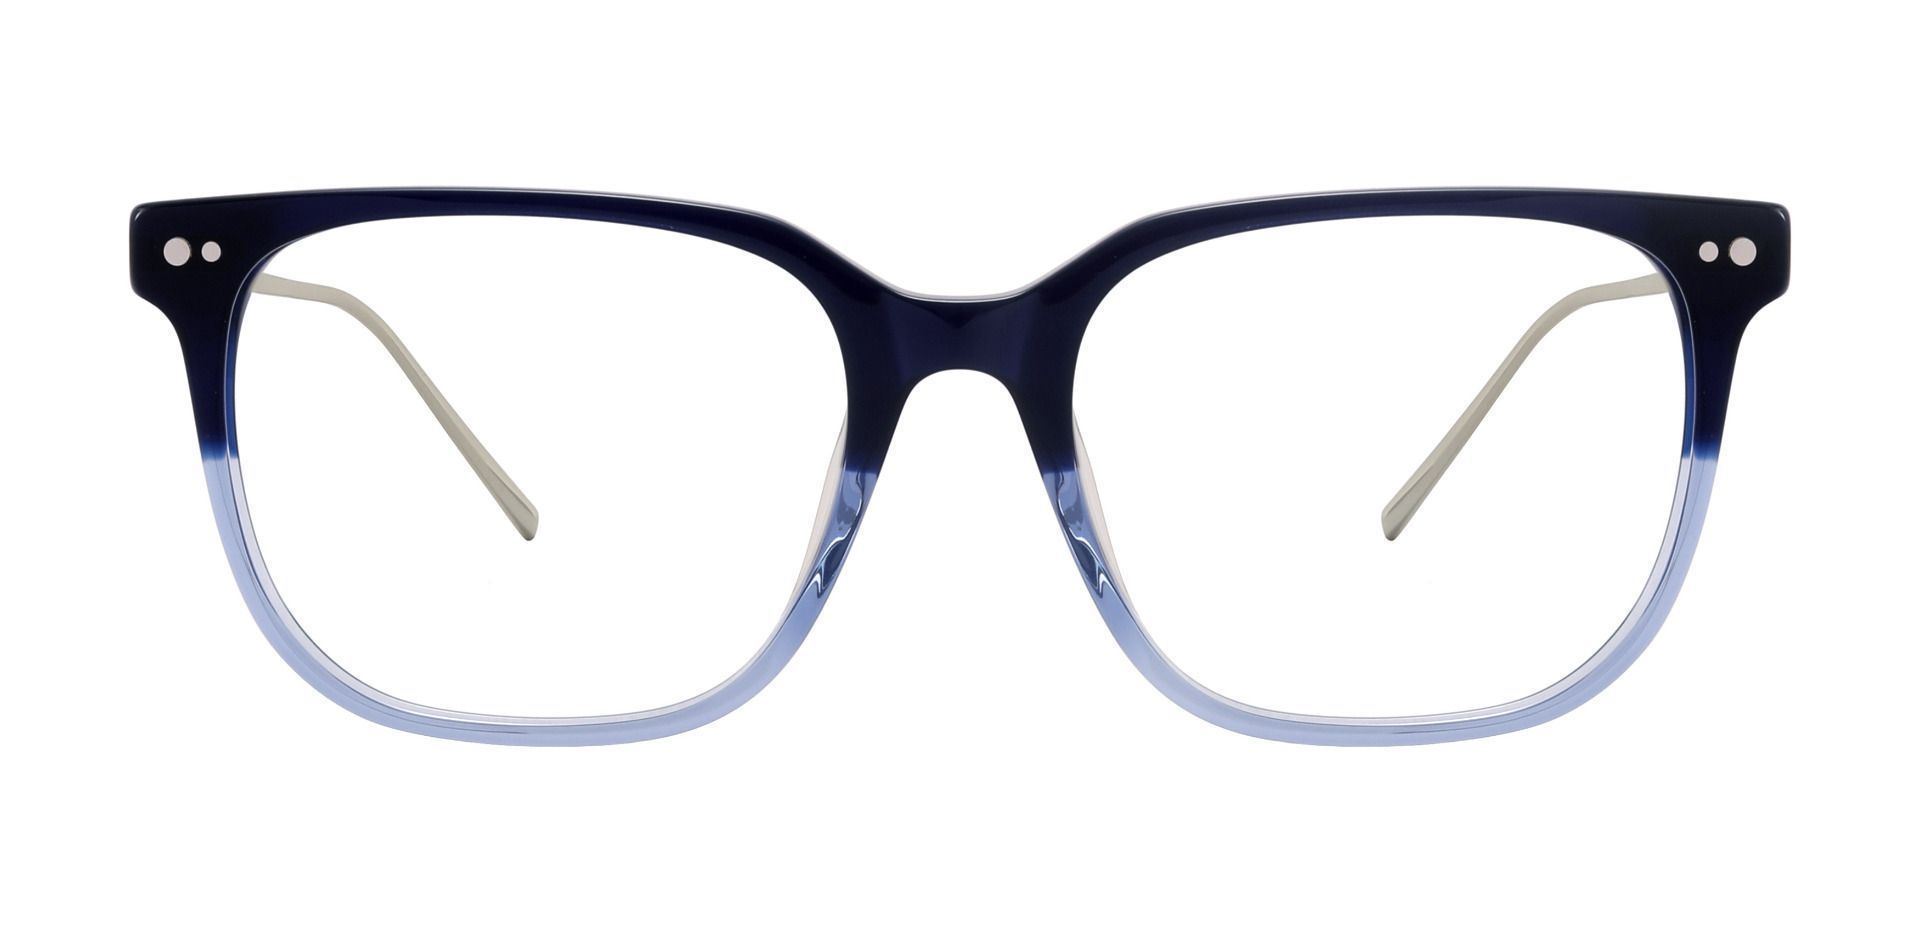 Hogan Rectangle Prescription Glasses - Brown | Women's Eyeglasses ...